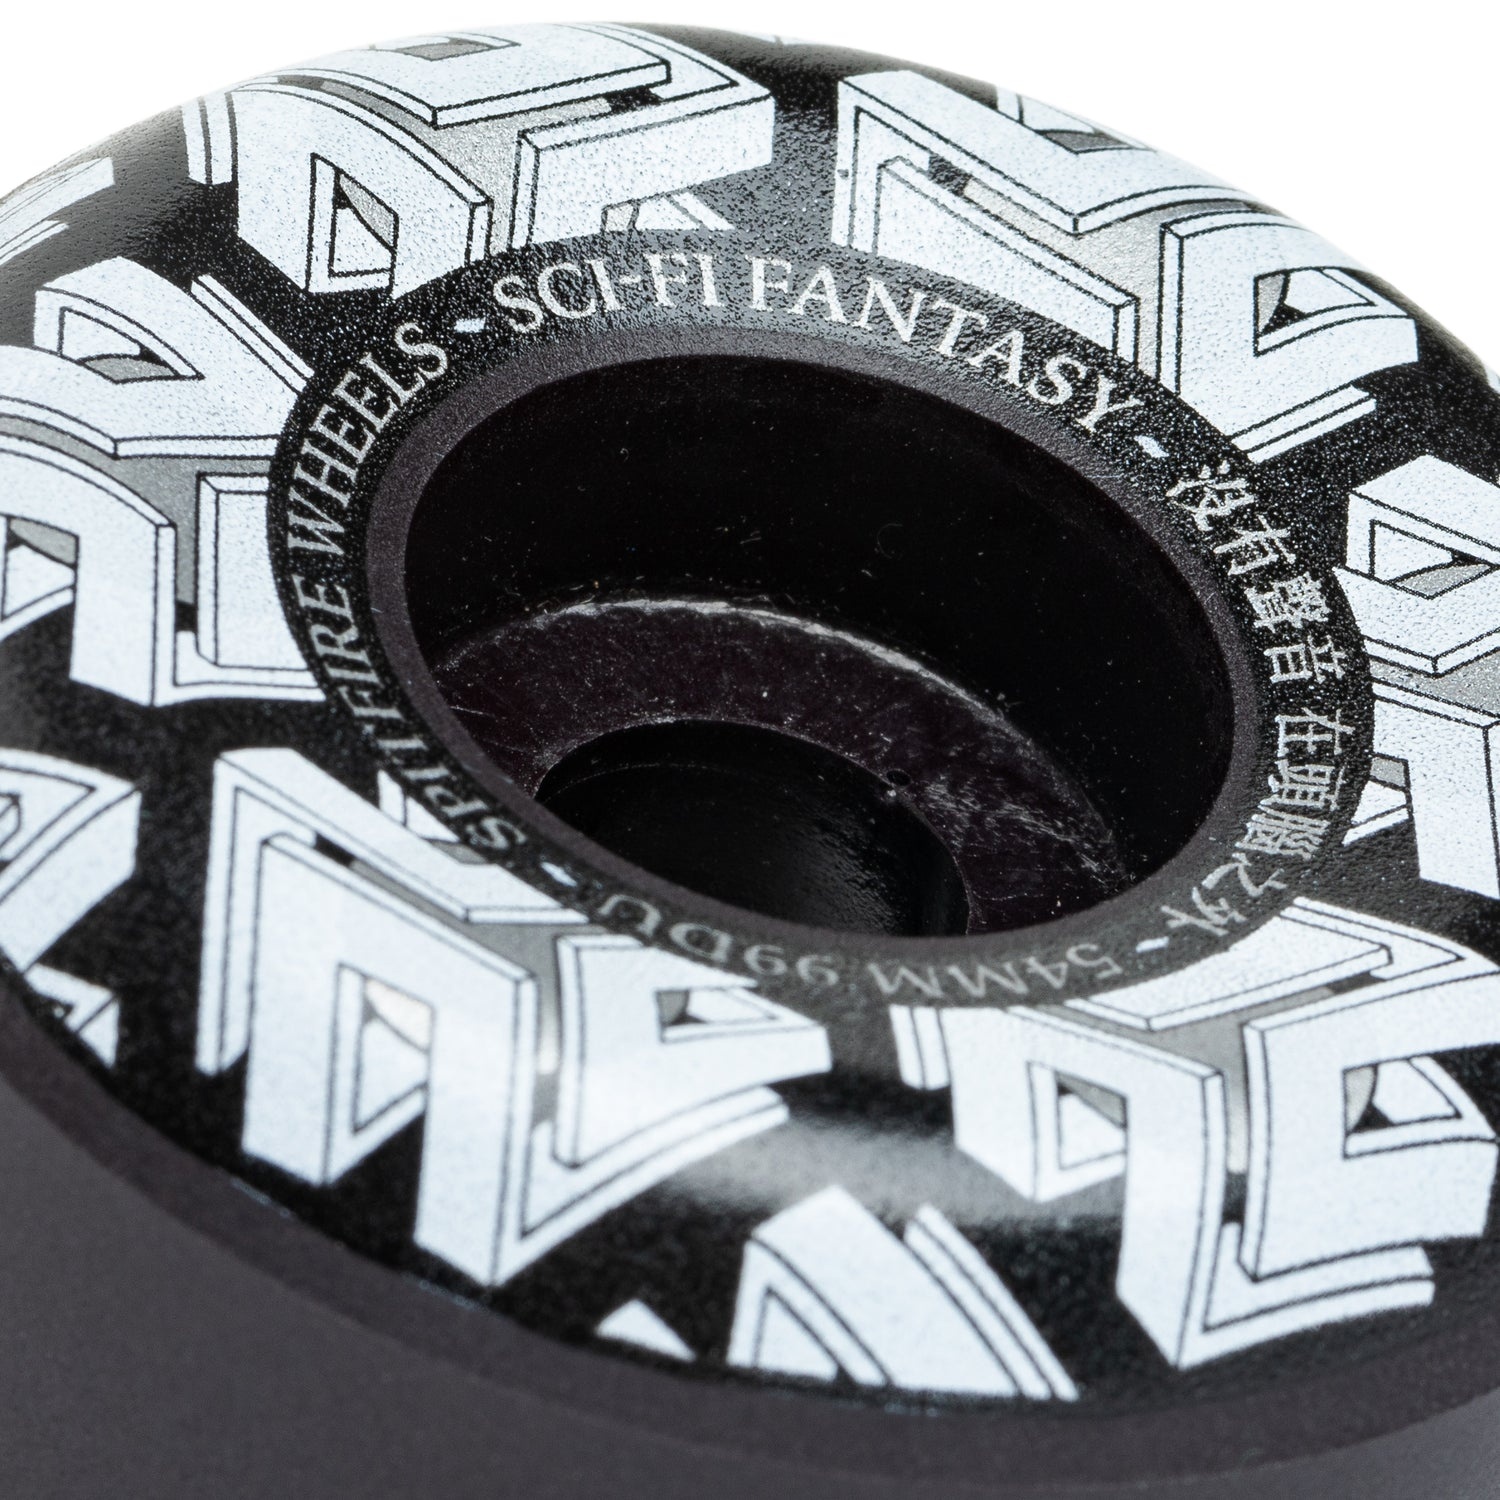 spitfire spitfire f4 99 dyson sci-fi conical black 54mm wheels